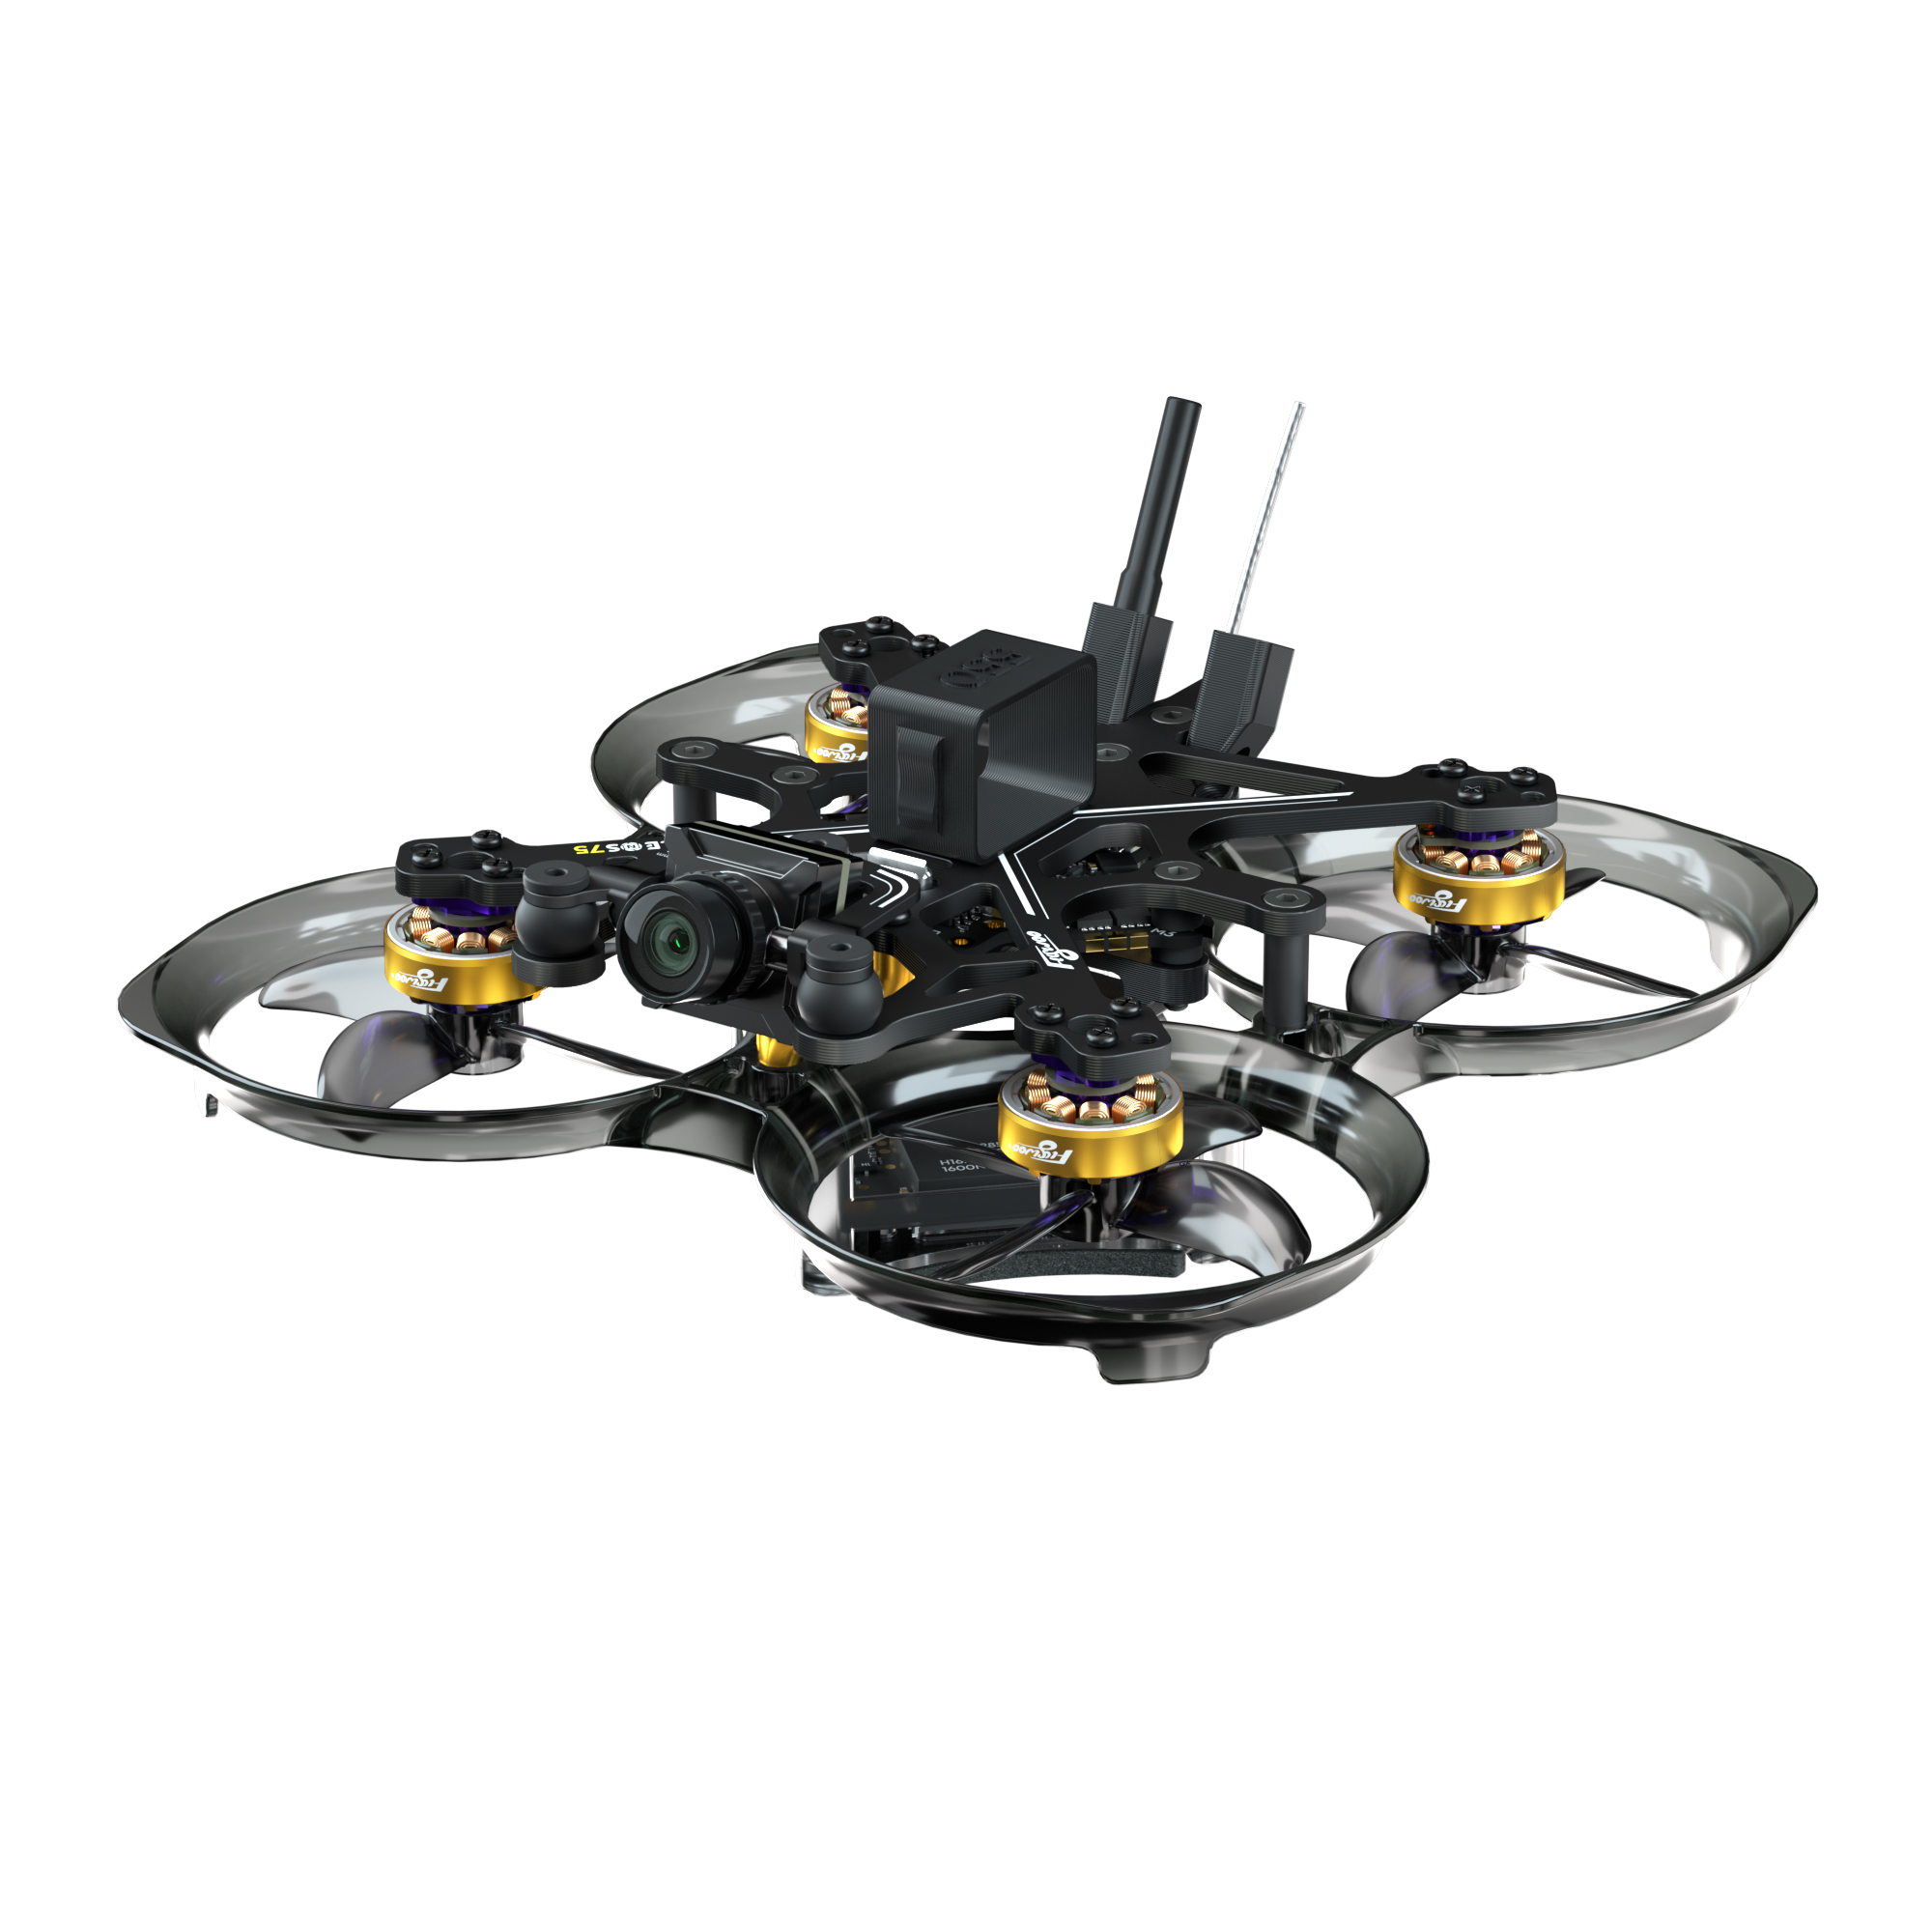 FlyLens 75 HD Walksnail 2S Brushless Whoop FPV Drone